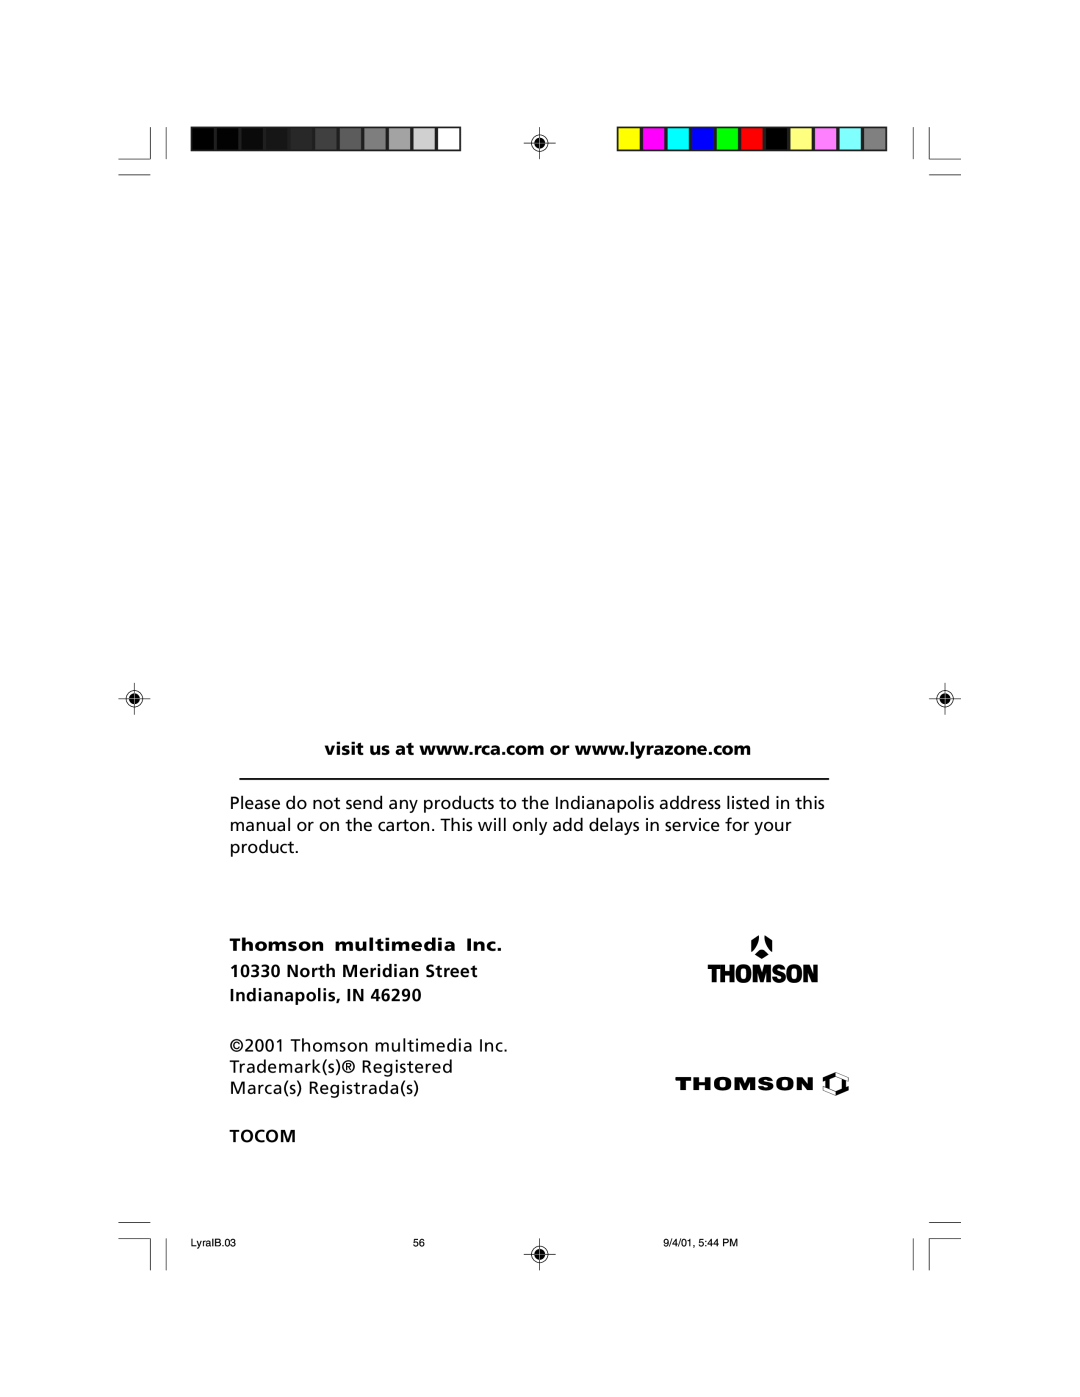 RCA RD2800 manual Thomson multimedia Inc, North Meridian Street Indianapolis, IN, Tocom, LyraIB.03, 9/4/01, 5 44 PM 